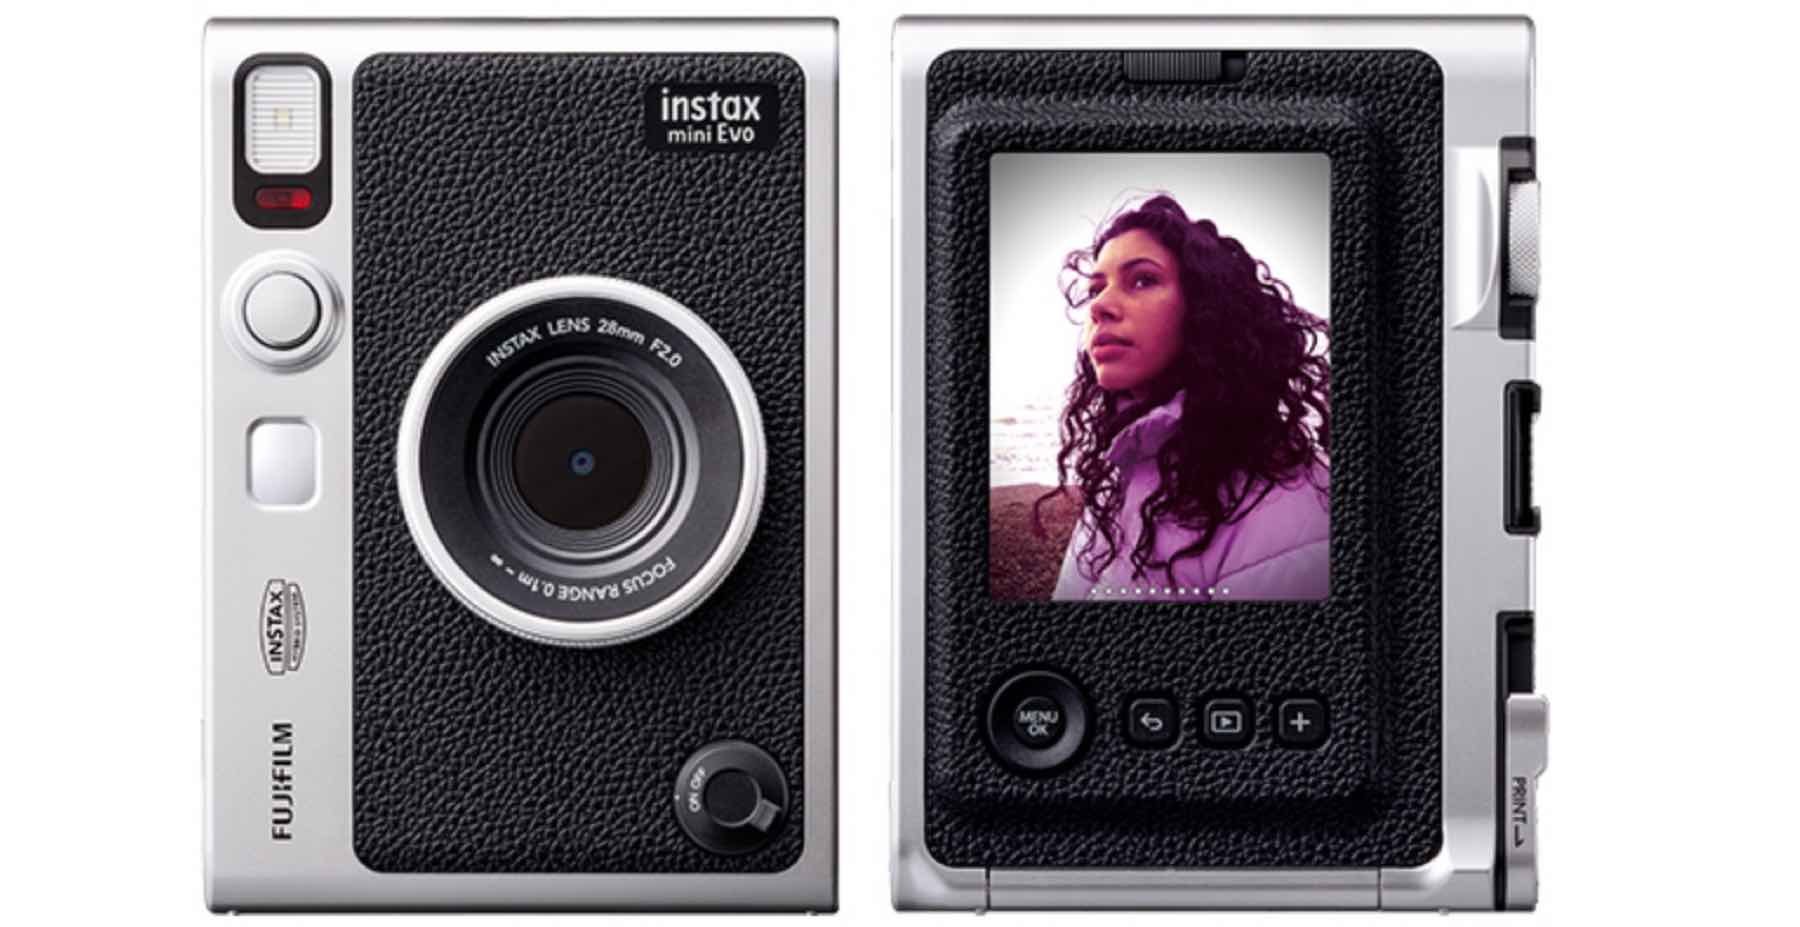 Fujifilm launches Hybrid Instant Camera “Instax Mini Evo” - Fuji Rumors